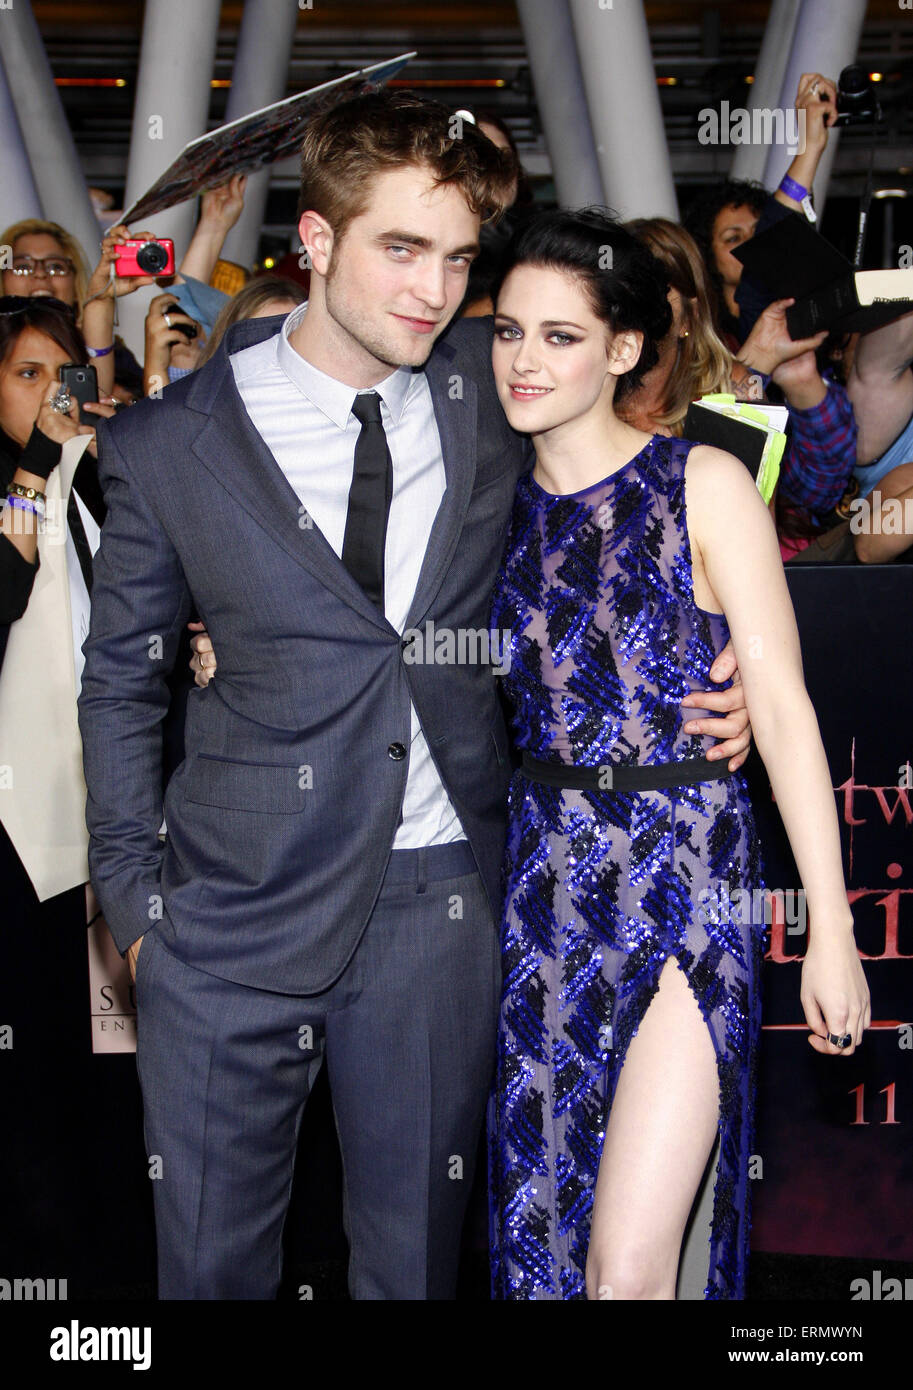 Robert Pattinson and Kristen Stewart at the Los Angeles premiere of 'The Twilight Saga: Breaking Dawn Part 1'. Stock Photo